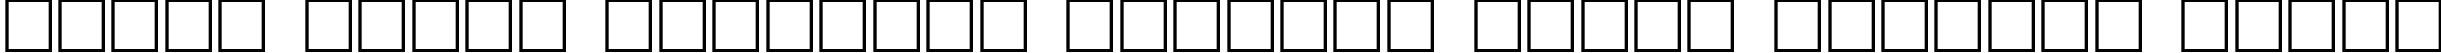 Пример написания шрифтом Grids n Things текста на белорусском